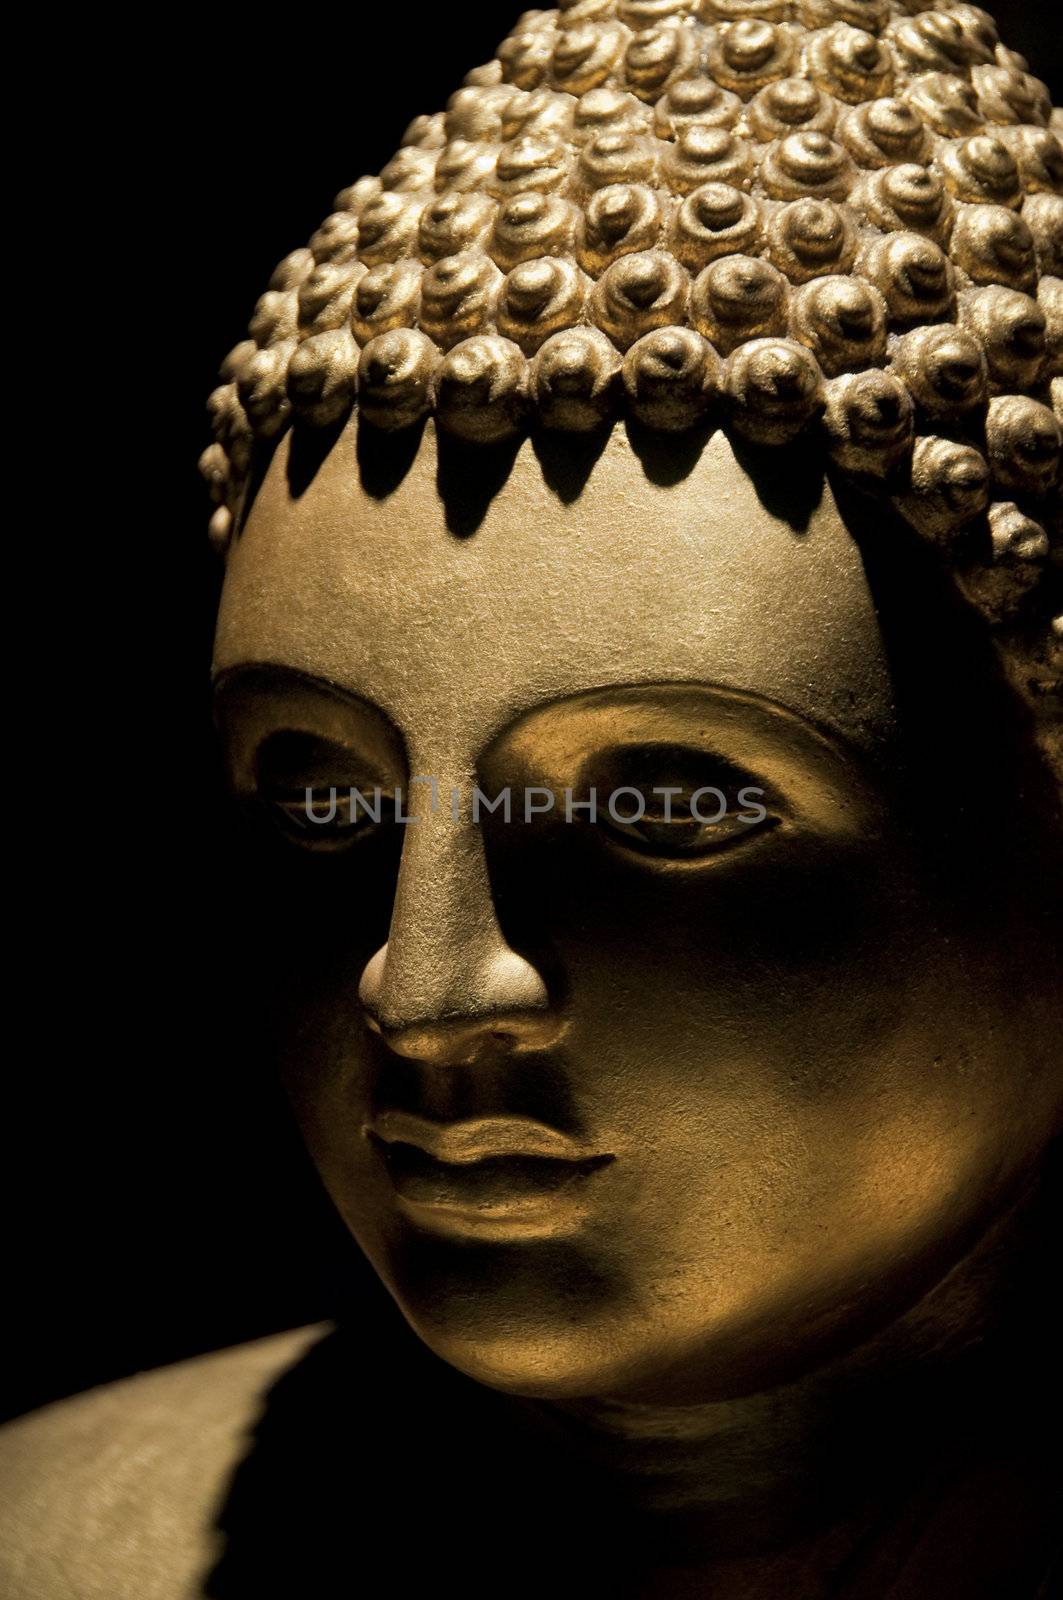 Golden Buddha statue, portrait photography